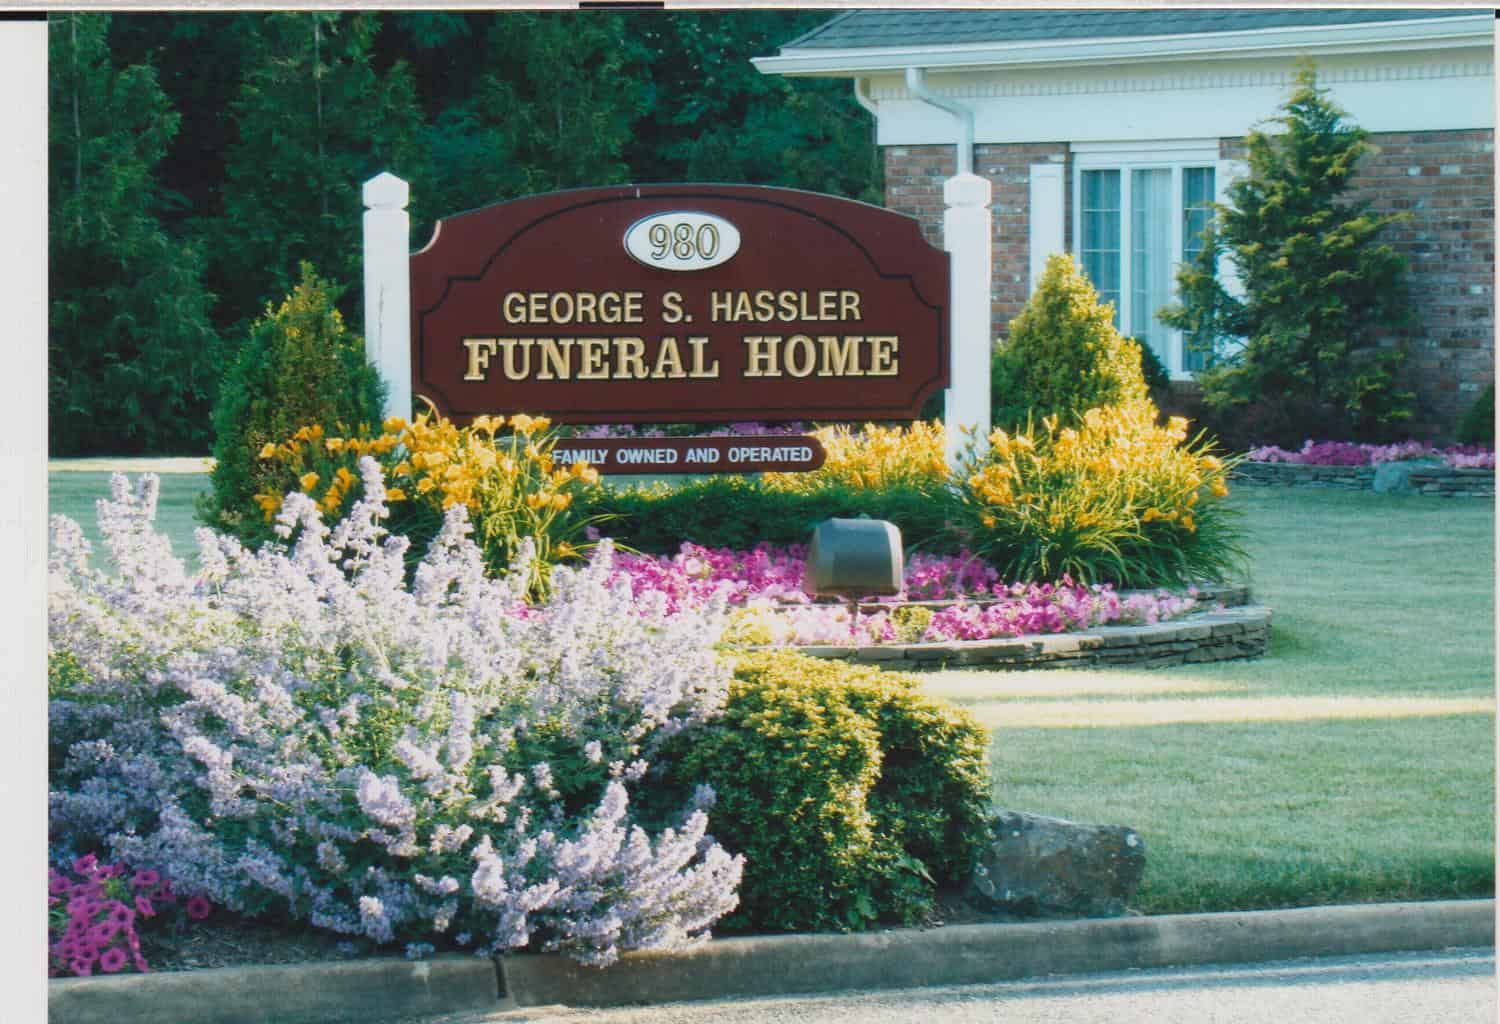 George S. Hassler Funeral Home | Jersey Shore Online1500 x 1024